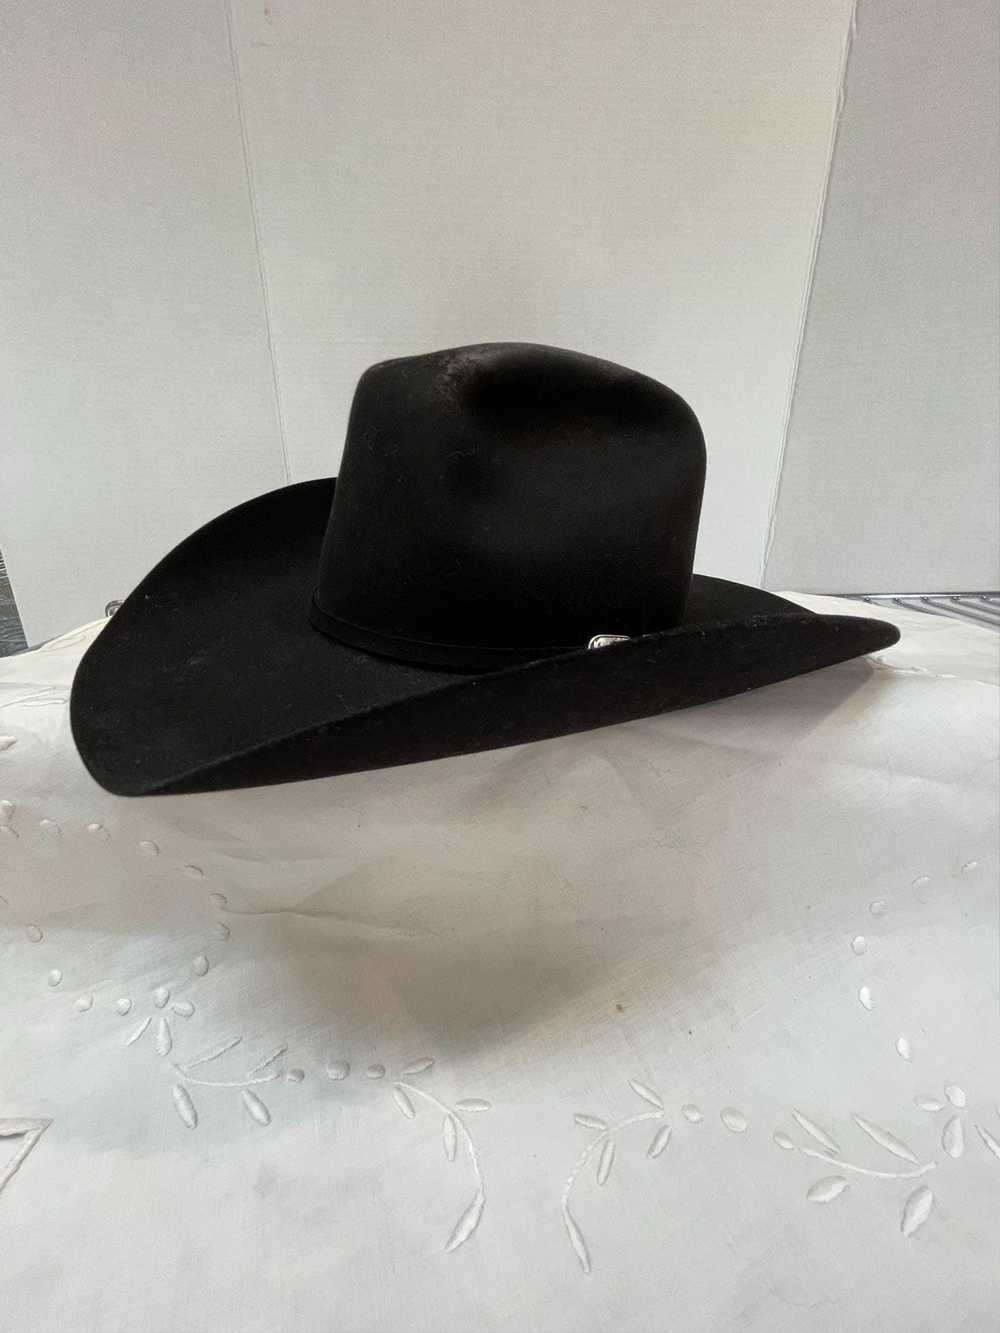 Bailey Bailey’s Men’s 8X Black Felt Fur Cowboy Hat - image 6